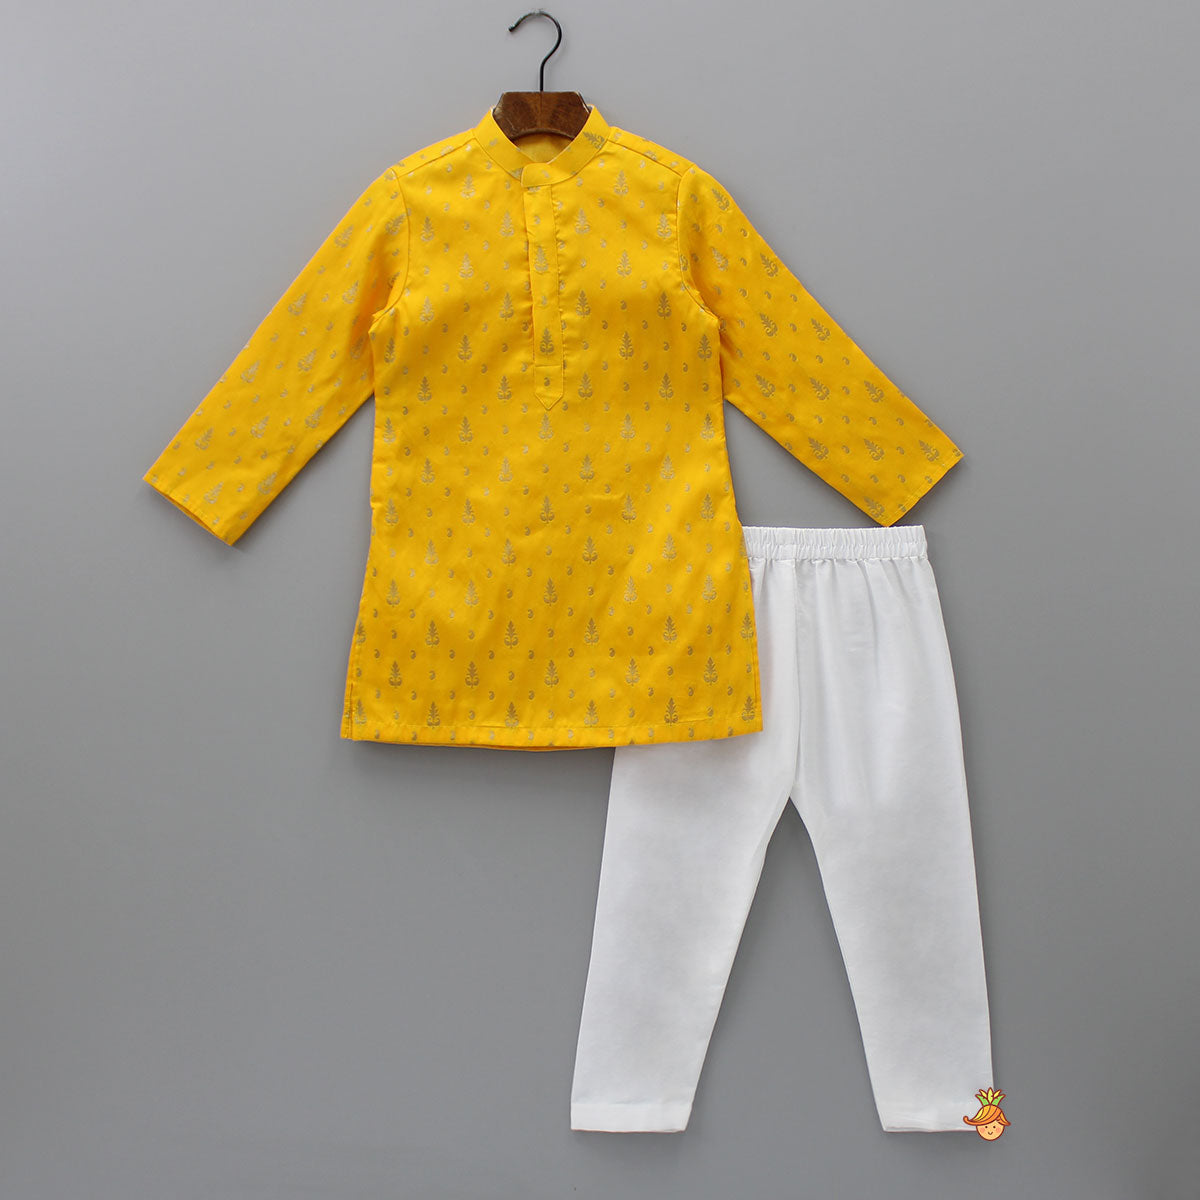 Brocade Kurta And Multicolored Jacket With Pyjama